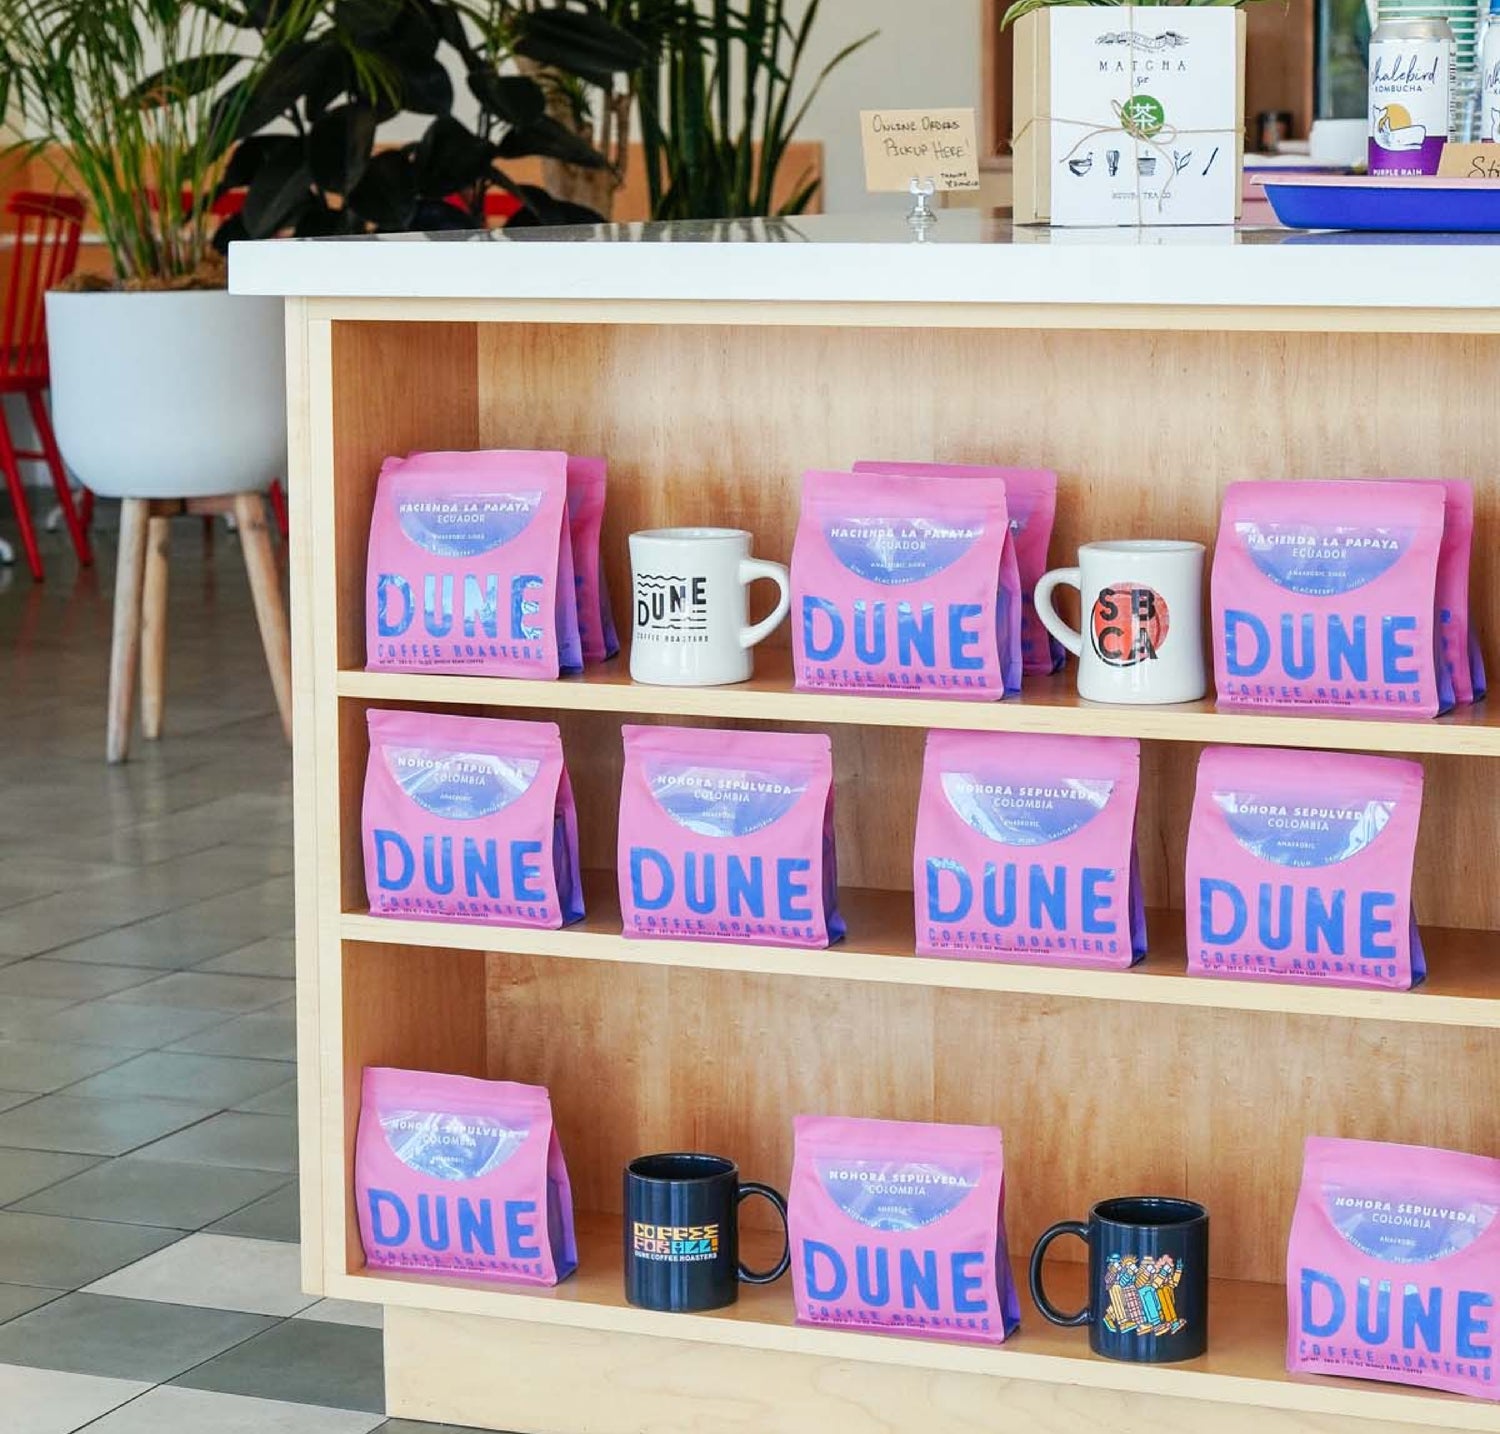 Array of pink single origin coffee bags on display